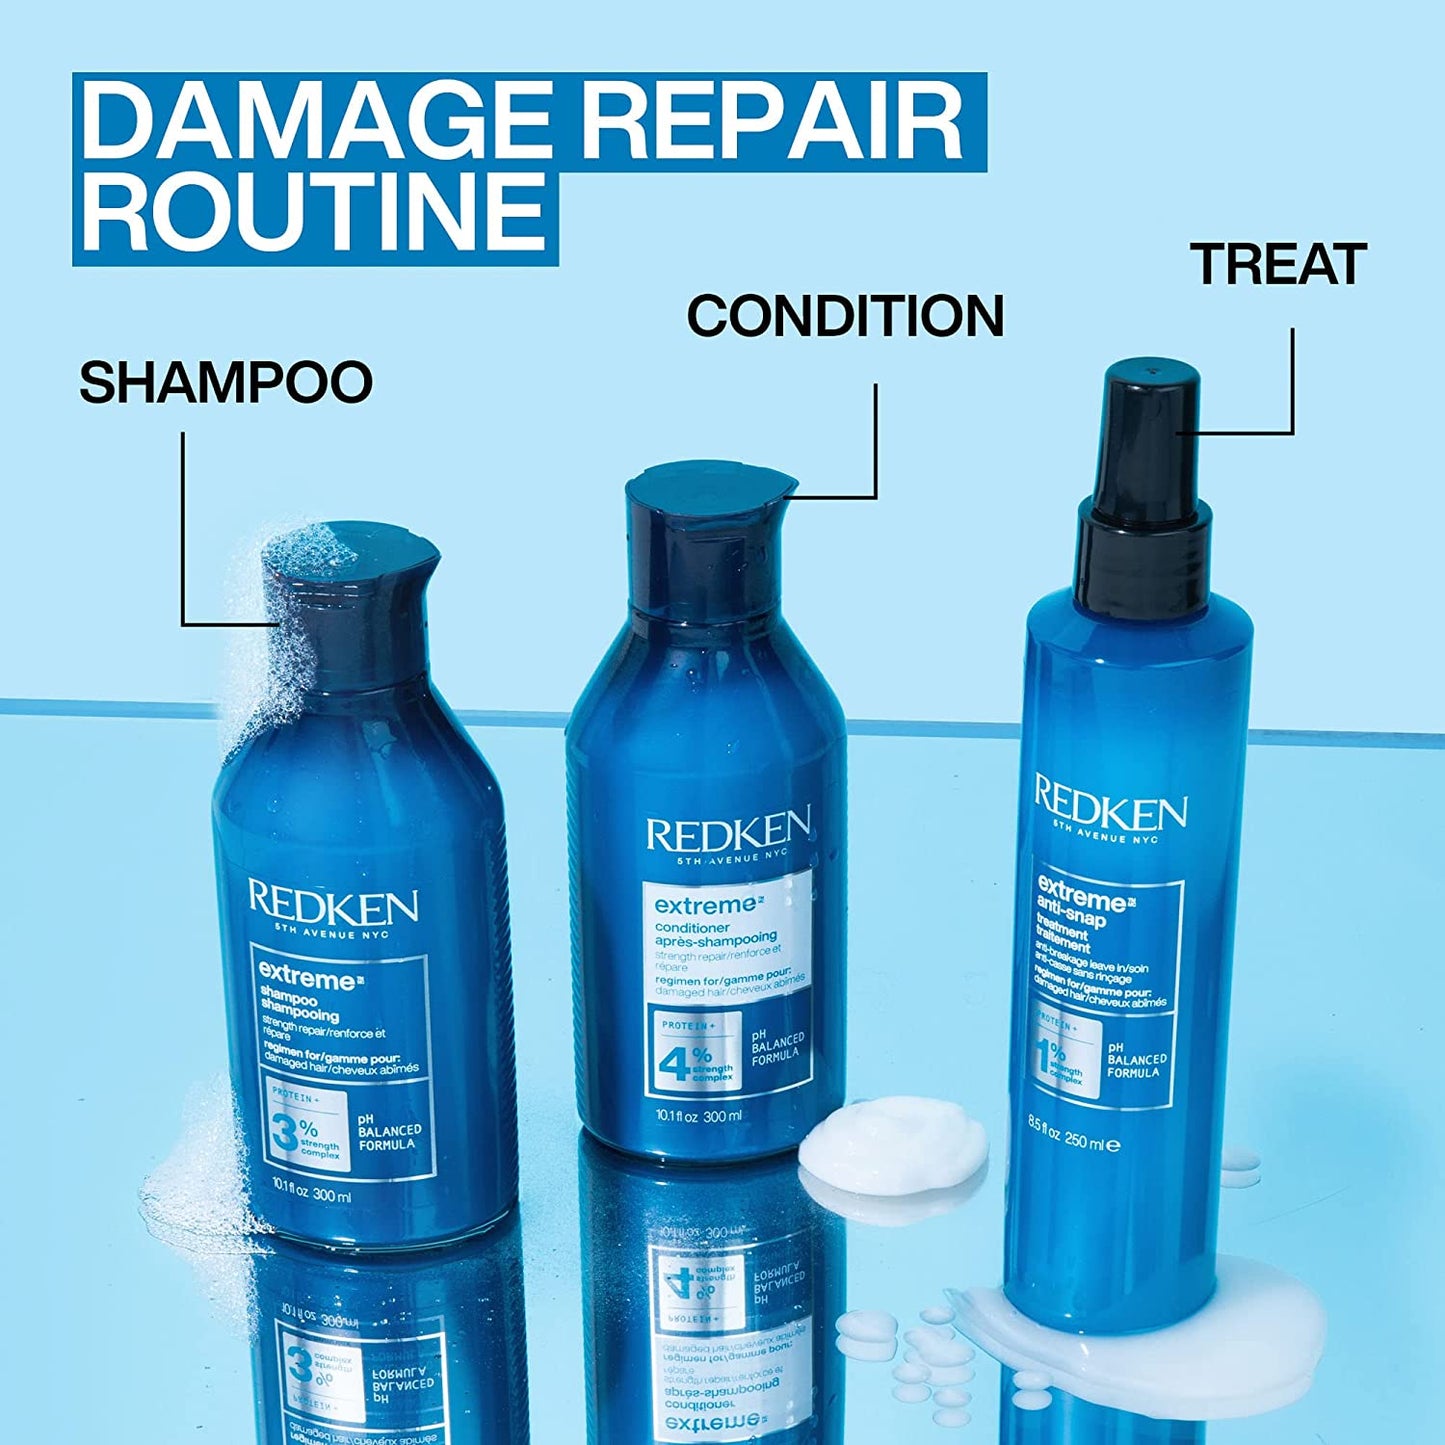 Redken 5th Avenue Nyc Extreme Shampoo pH Balanced Formula 1.7 fl oz  50ml